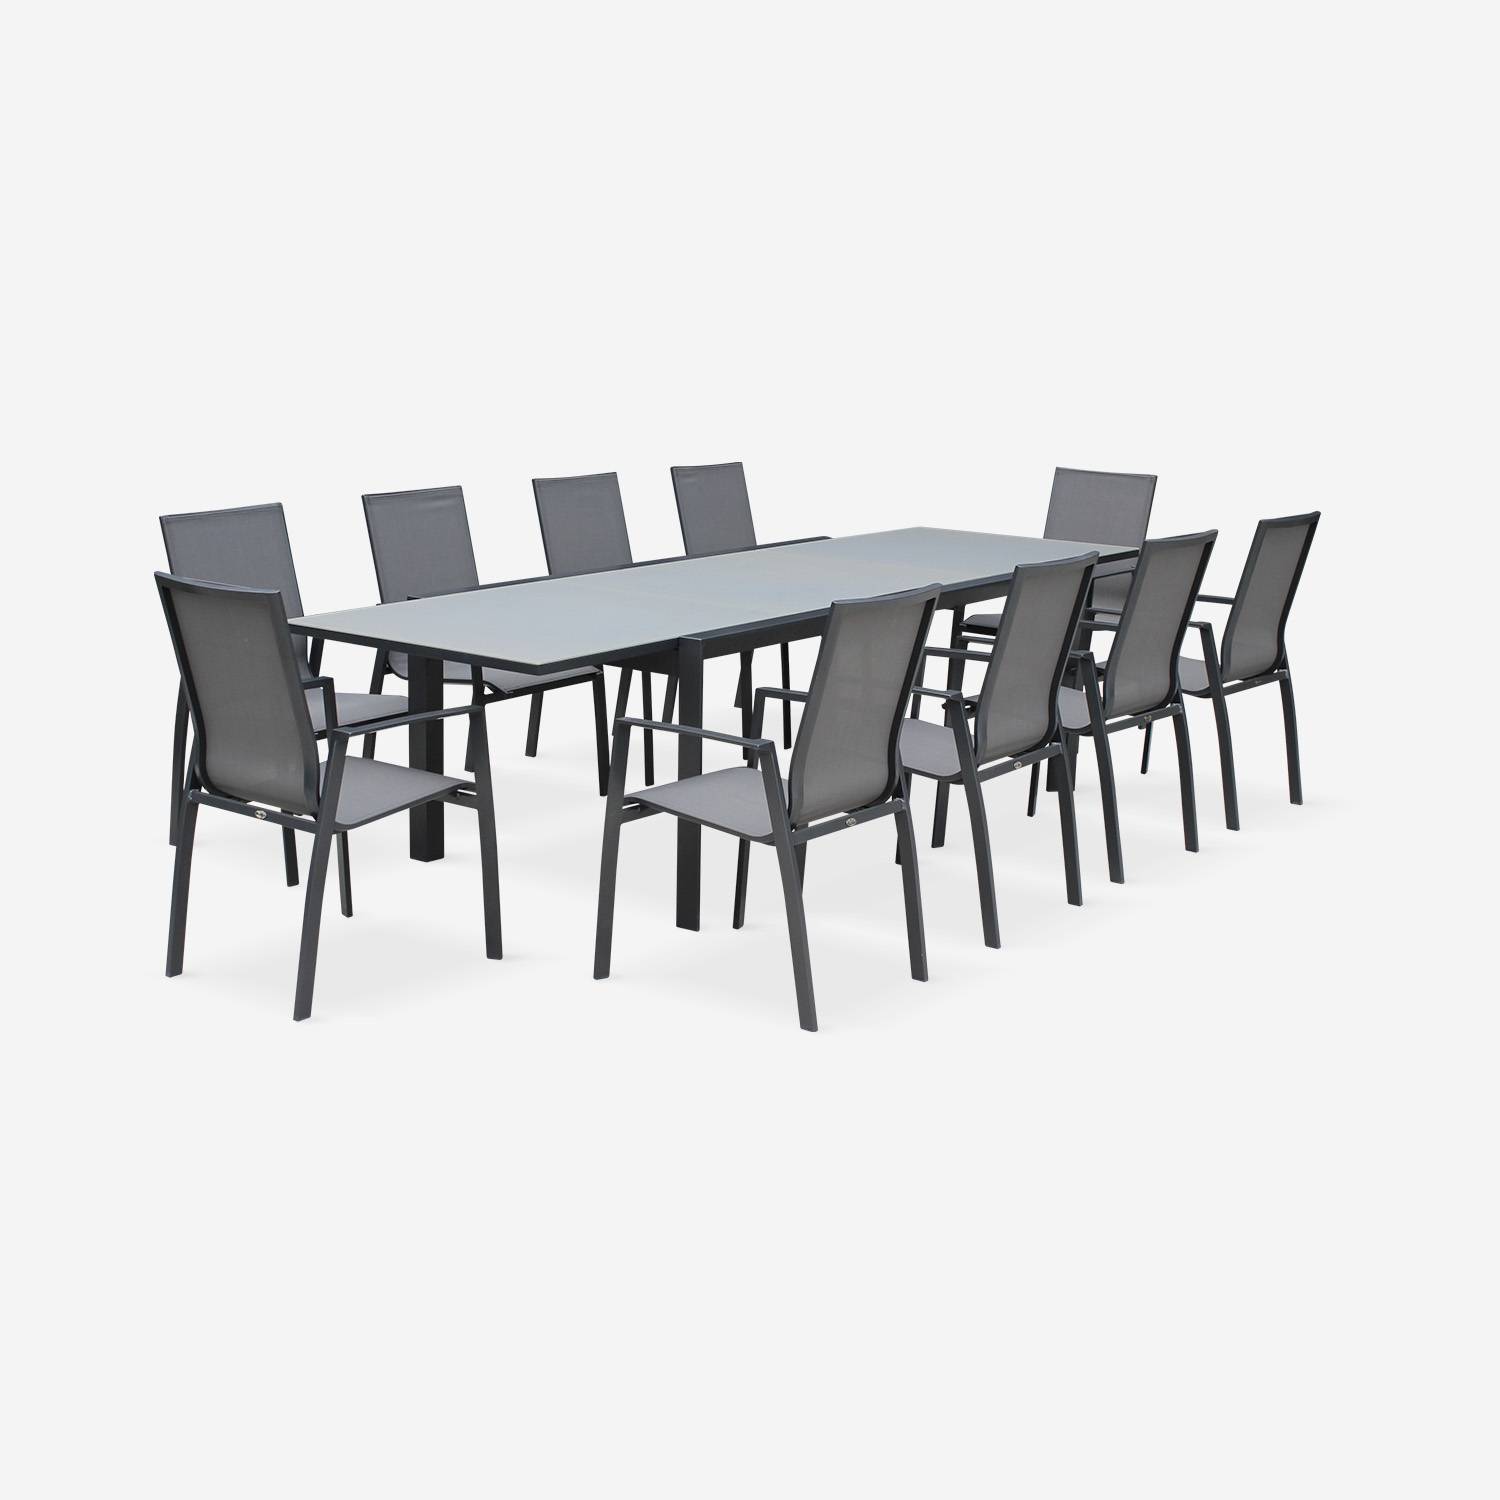 Juego de 2 sillas - Washington - Aluminio antracita y textileno gris oscuro, apilables Photo5